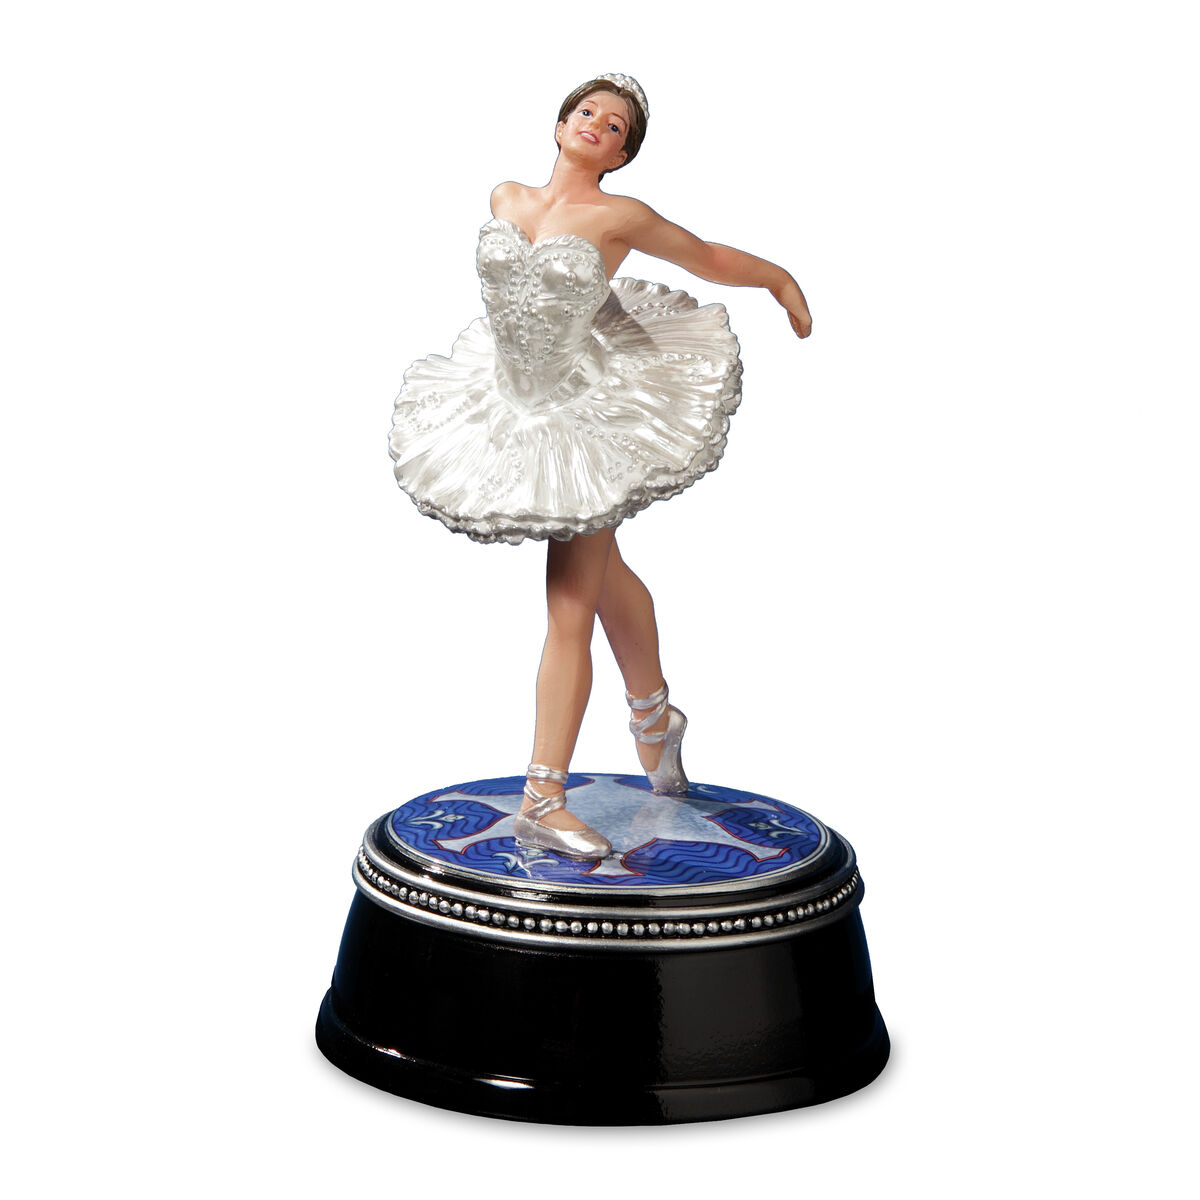 Ballerina figurine in white dress